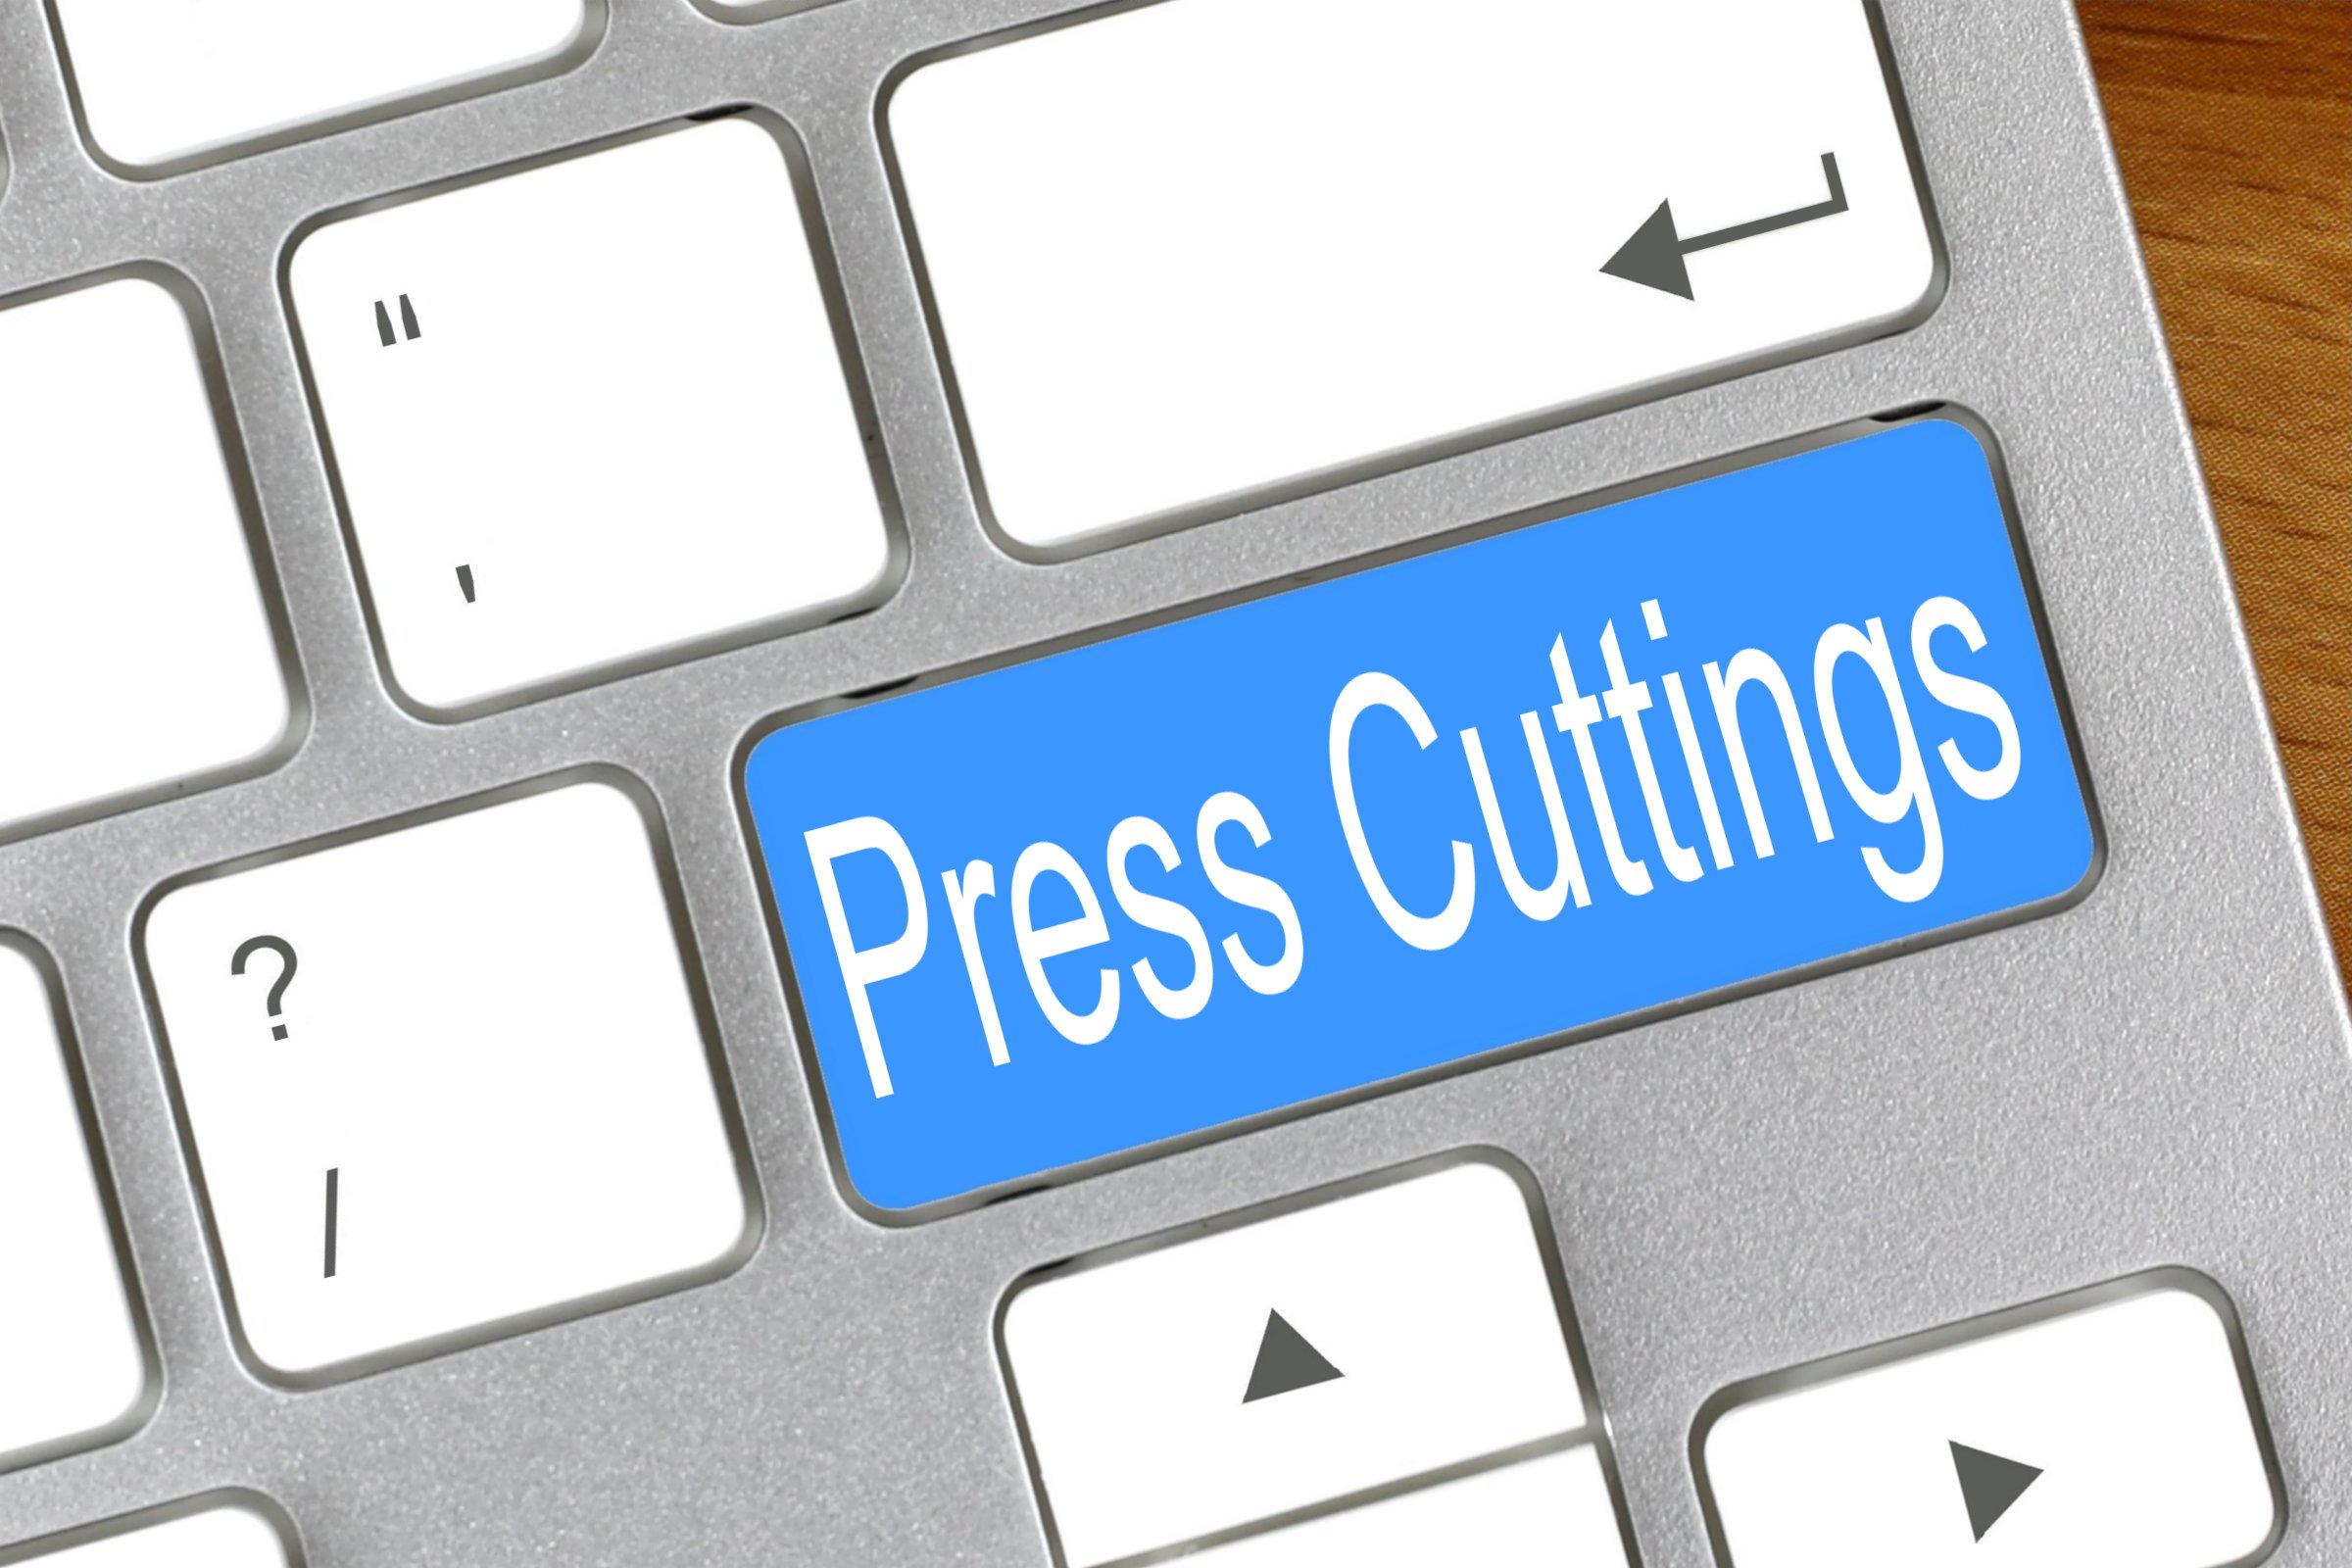 press cuttings